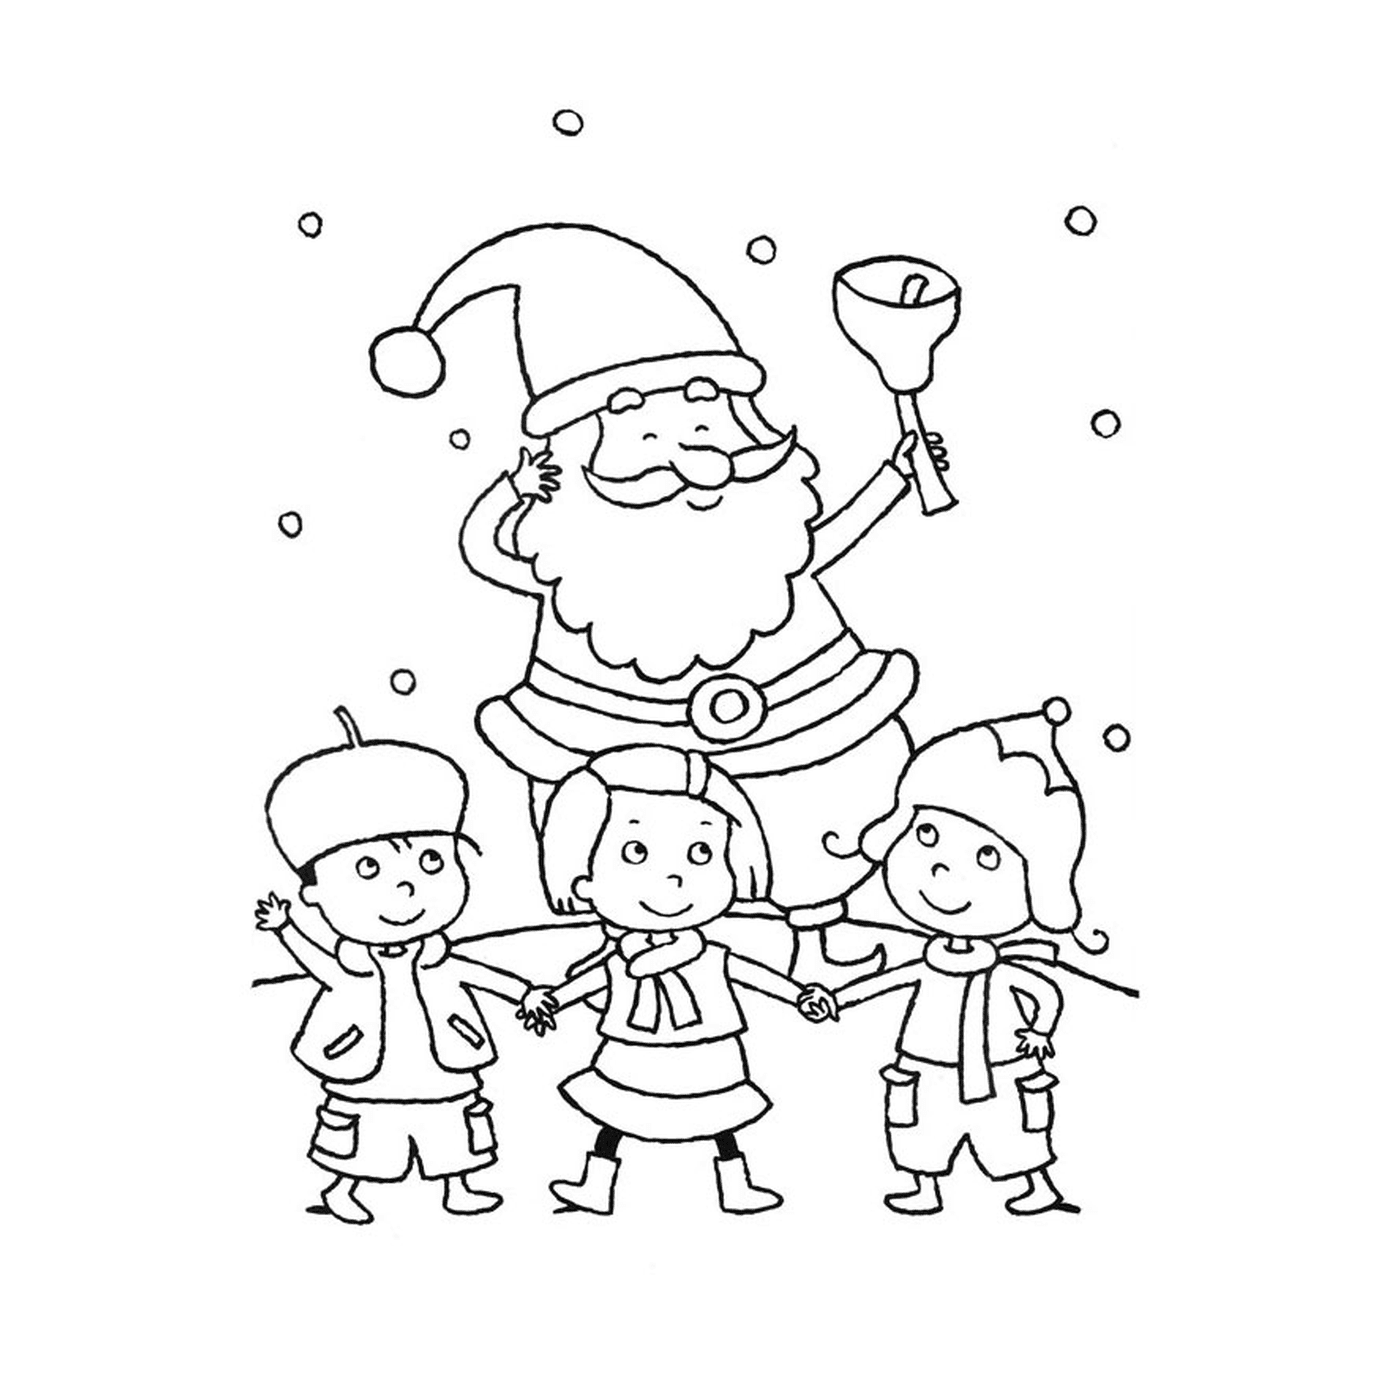  Group of children surrounding Santa Claus 